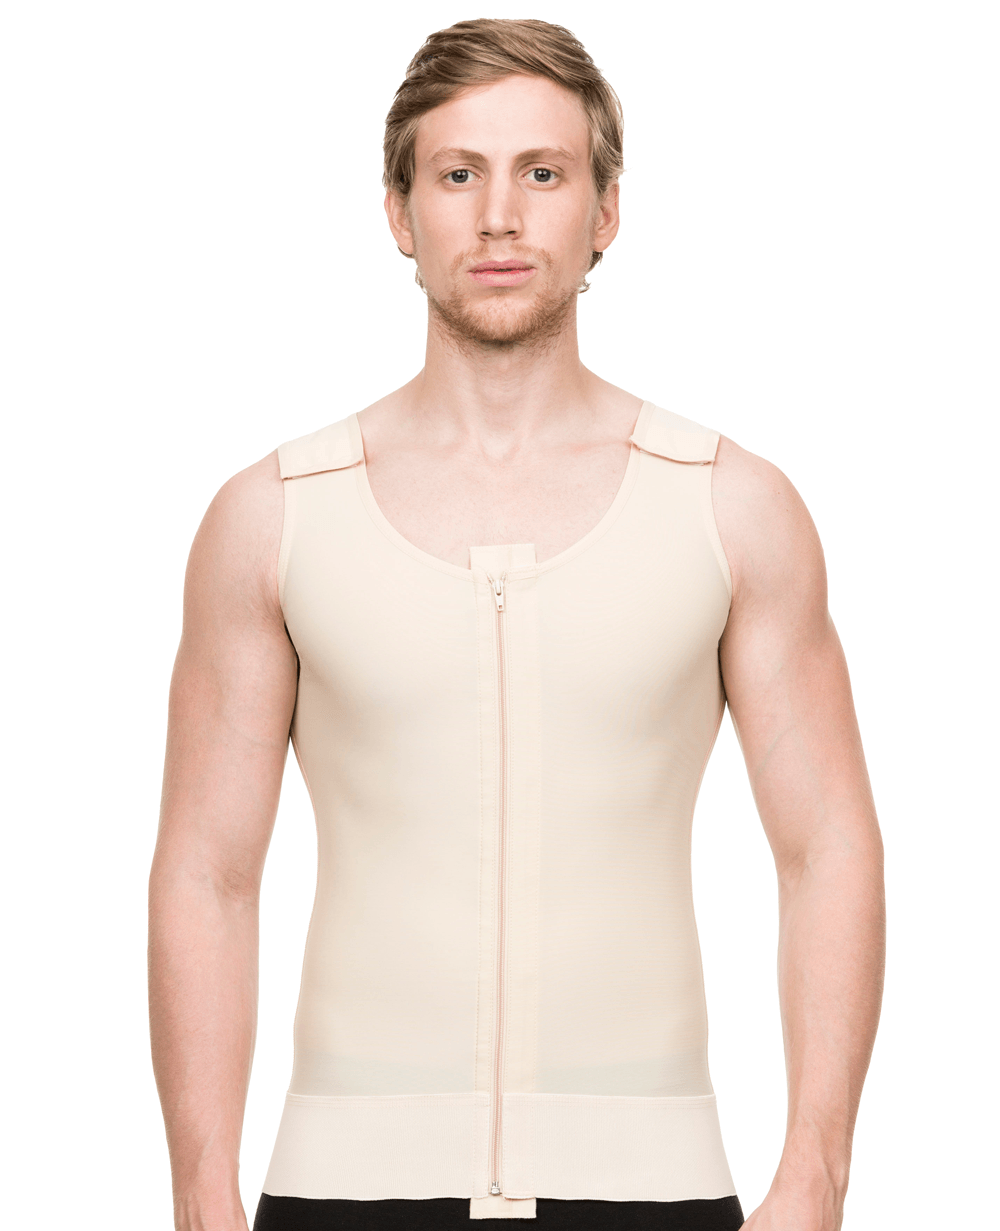 Isavela Male Short Sleeve Post Surgical Compression Vest Garment w